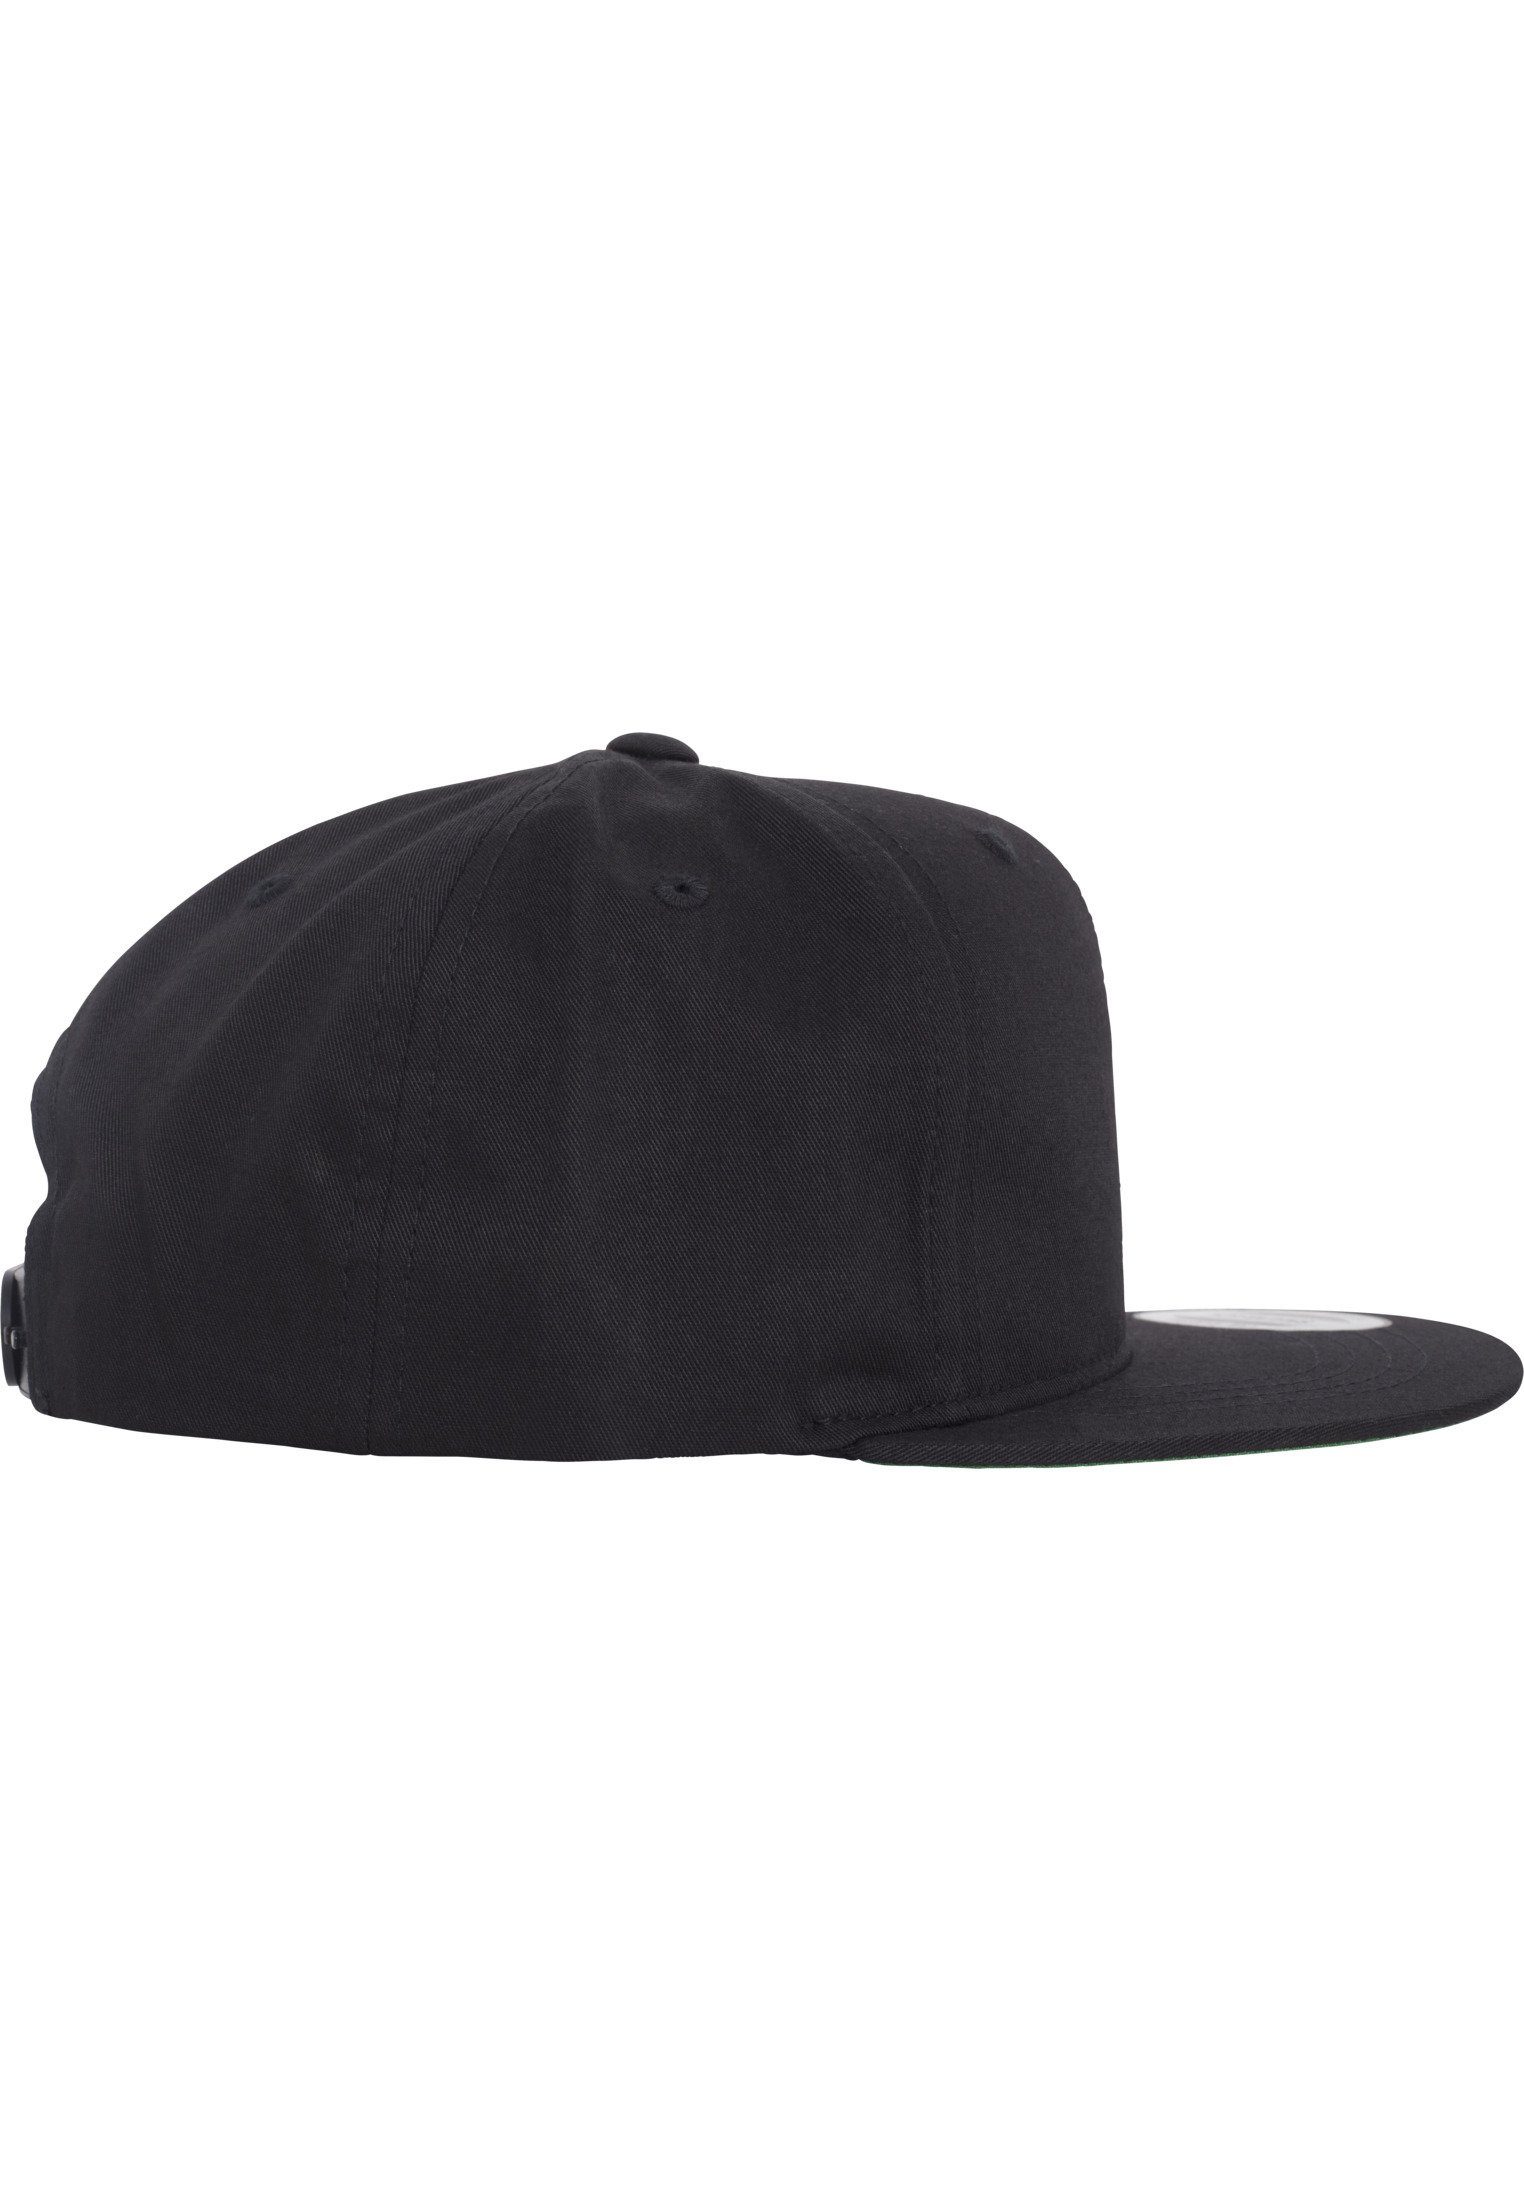 Flexfit Flex Cap Snapback Pro-Style black Twill Cap Youth Snapback